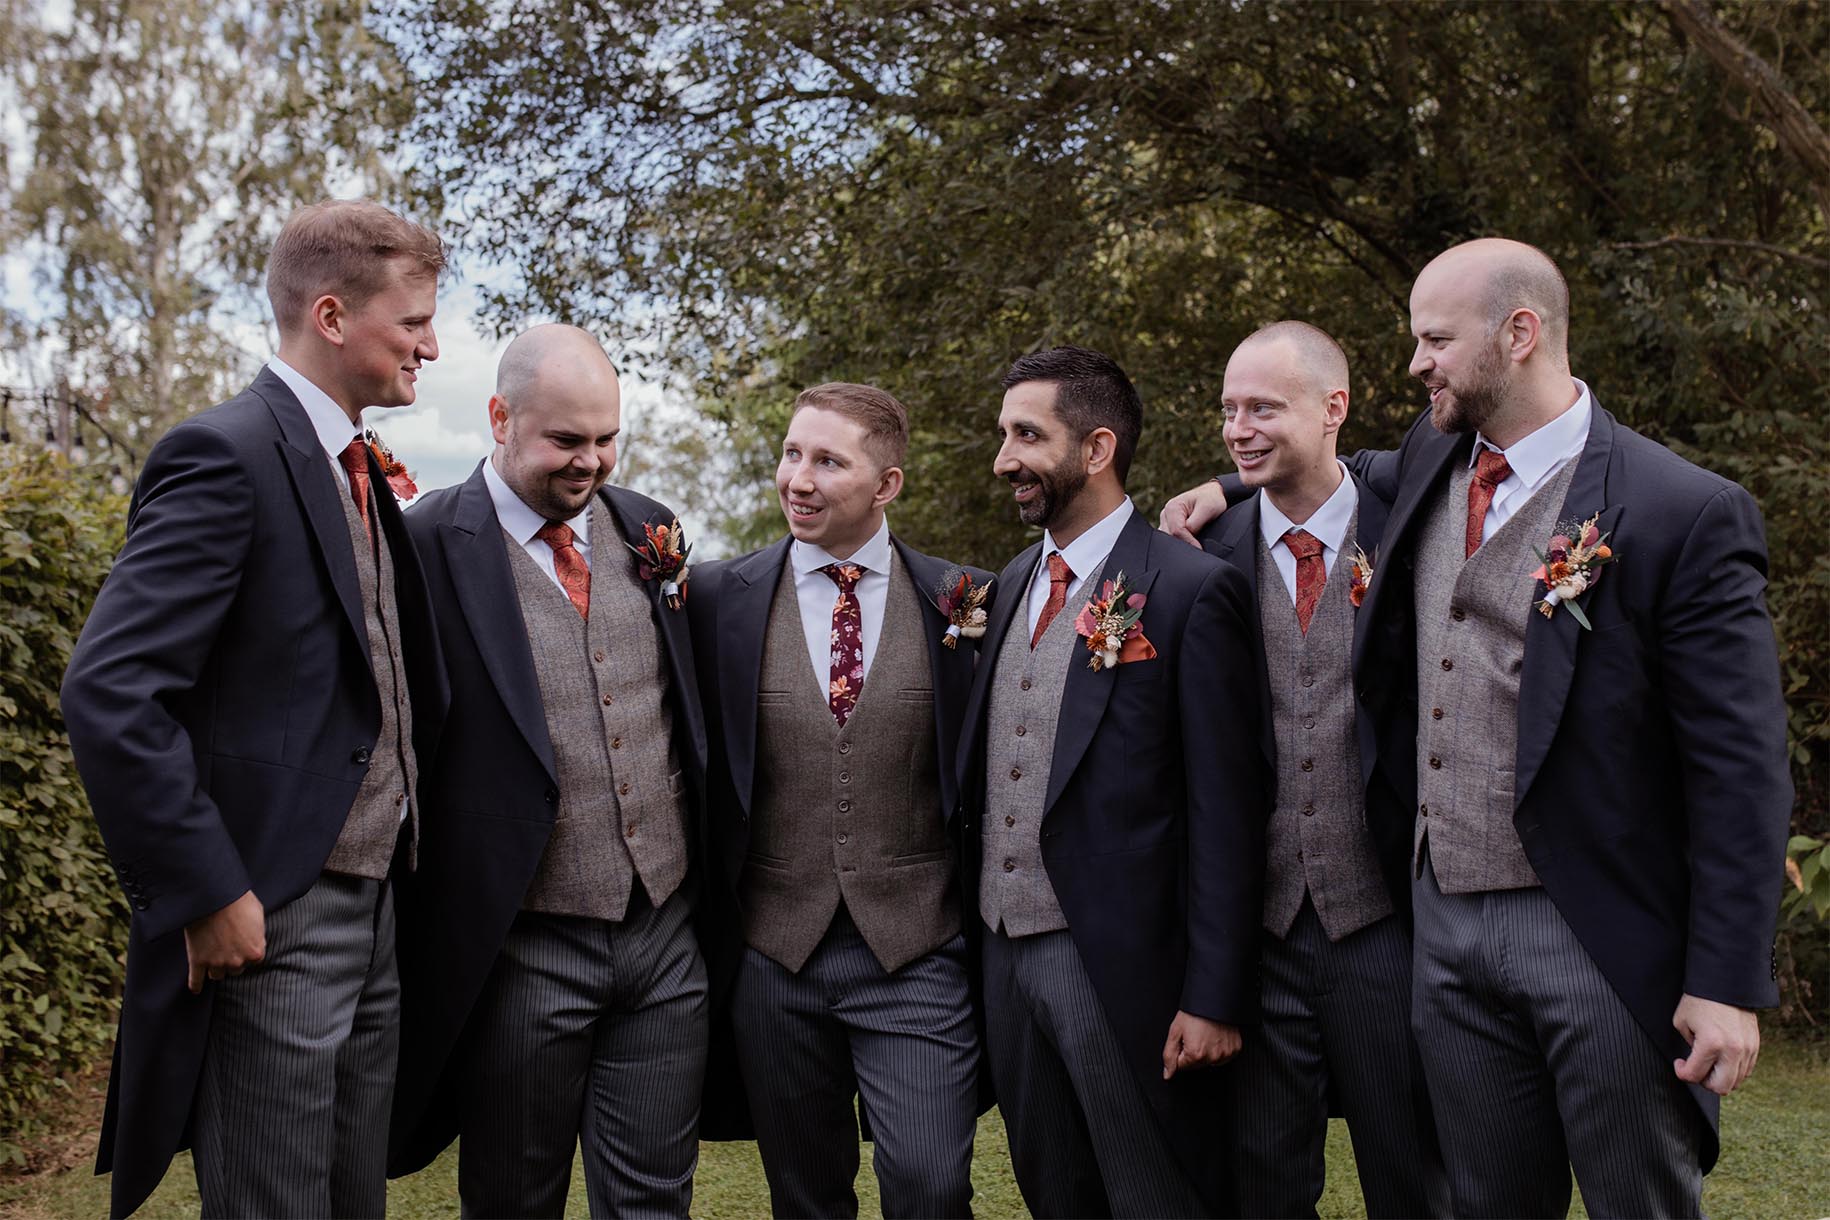 Essex wedding groom and groomsmen photography